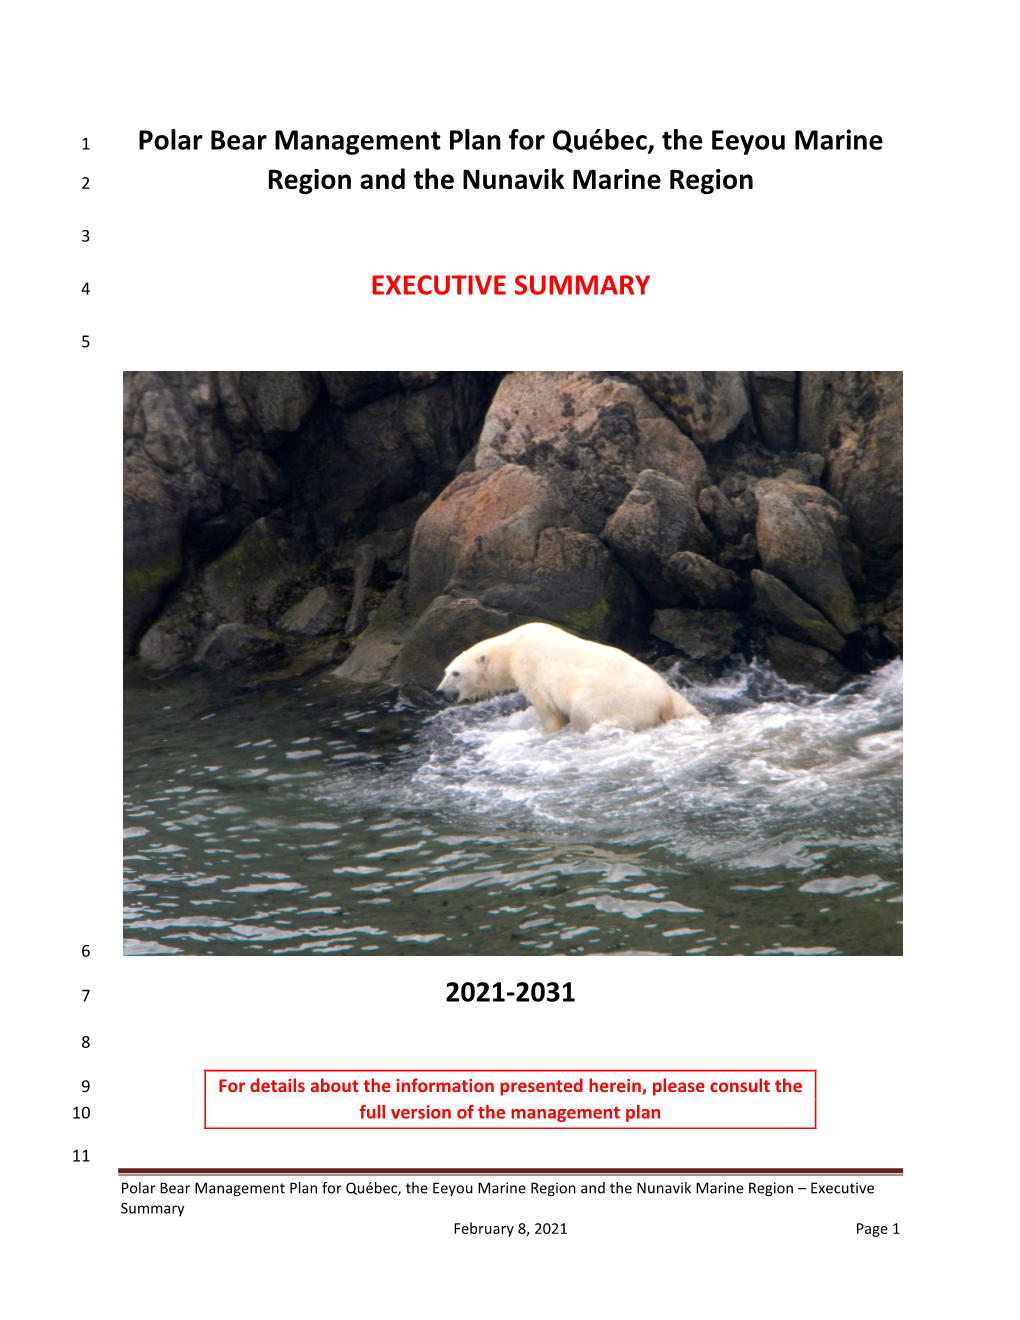 Polar Bear Management Plan for Québec, the Eeyou Marine Region and the Nunavik Marine Region – Executive Summary February 8, 2021 Page 1